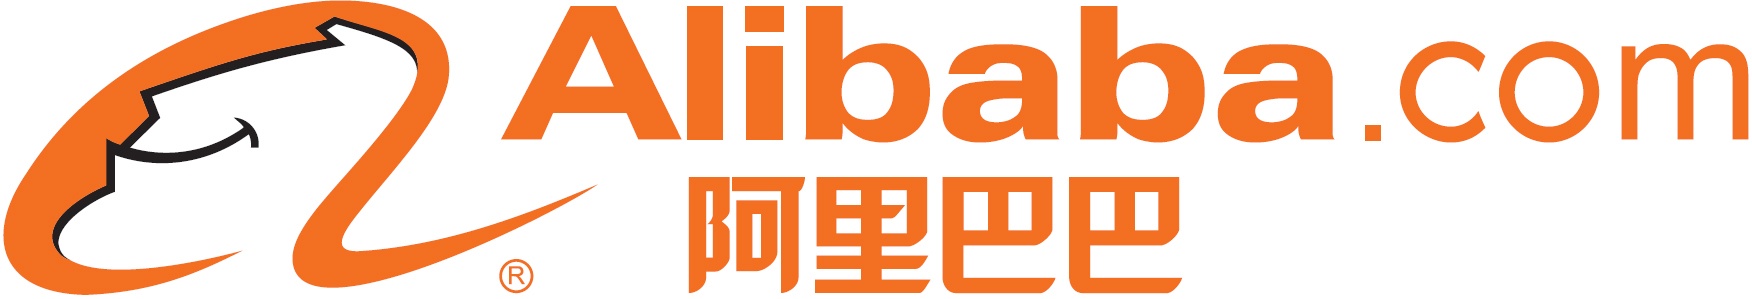 Alibaba Group​ | Business Model Ideas